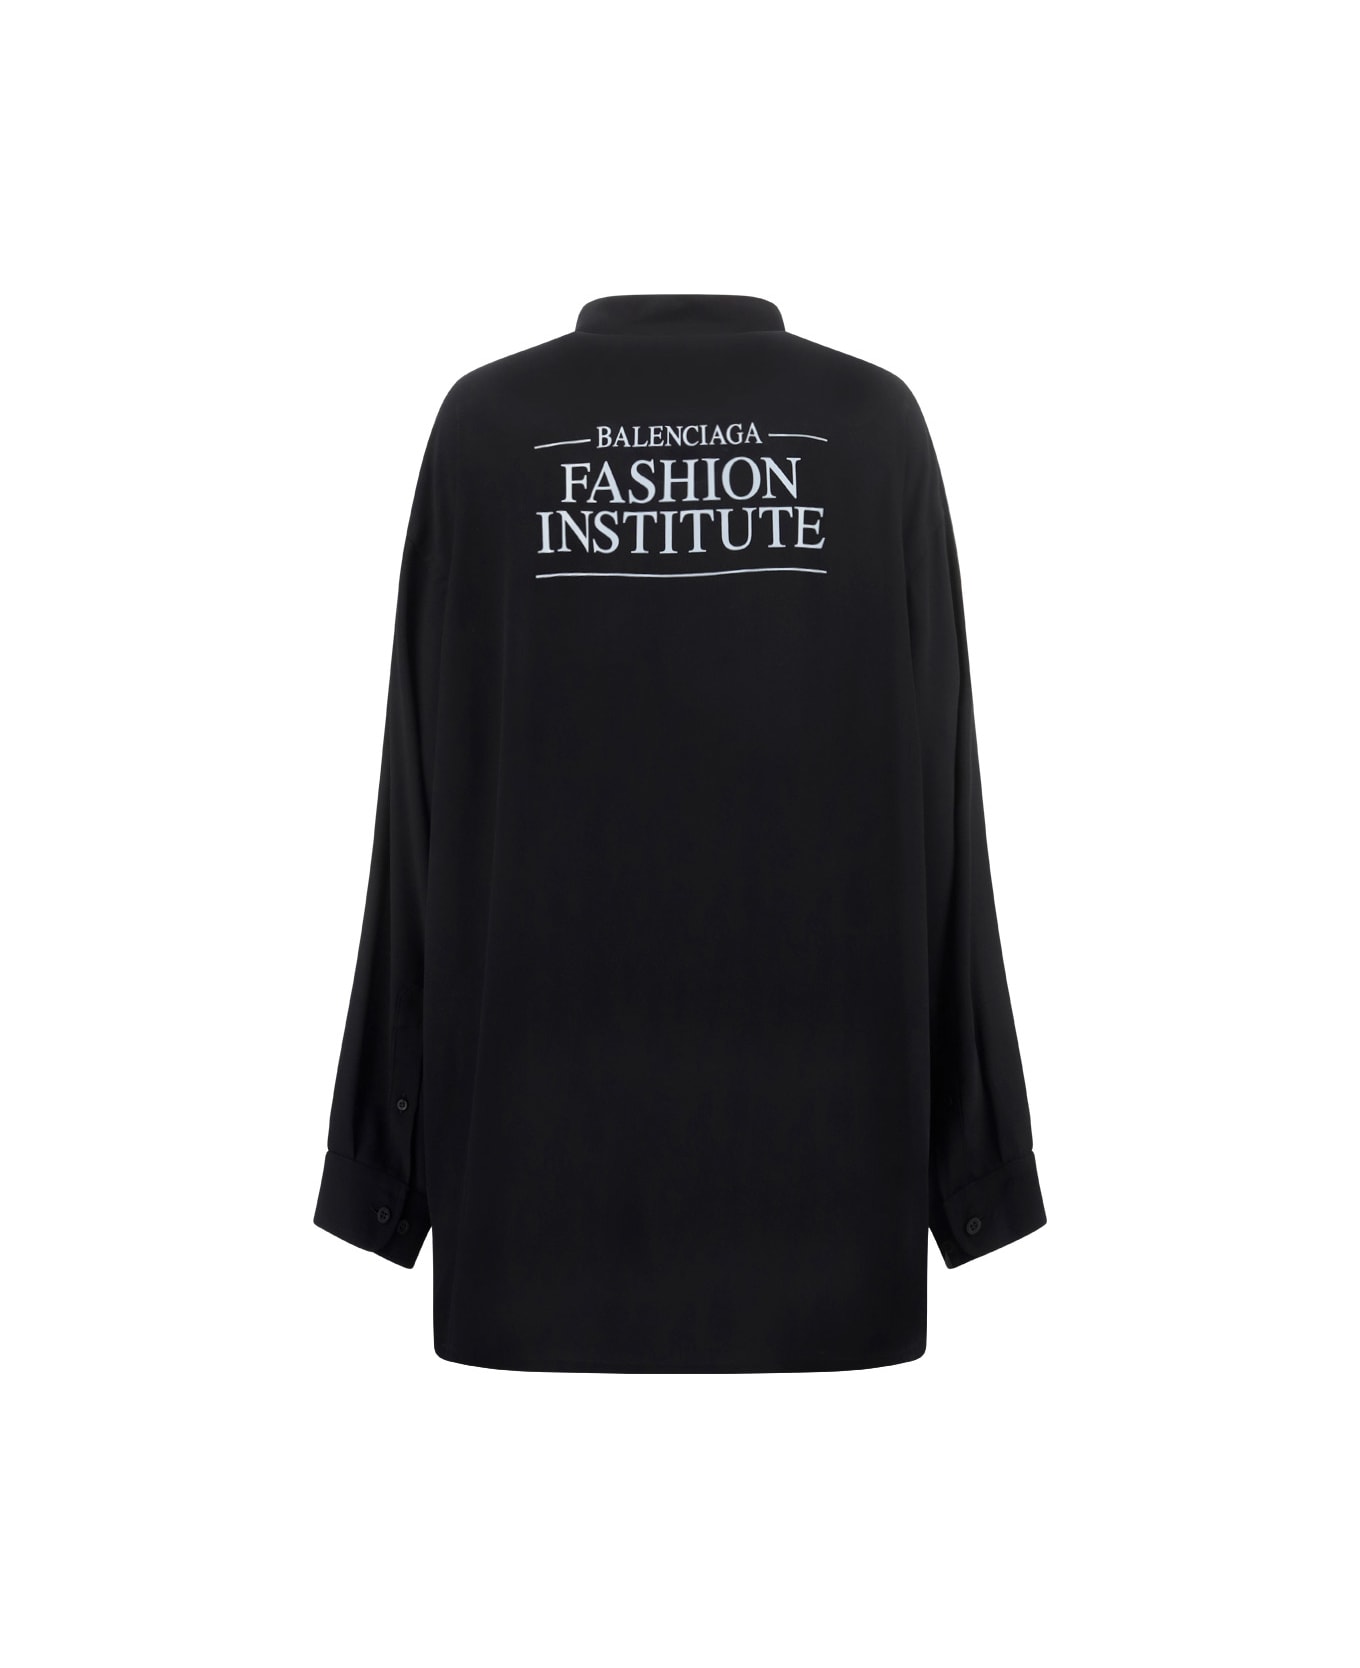 Balenciaga Fashion Institute Shirt - Black